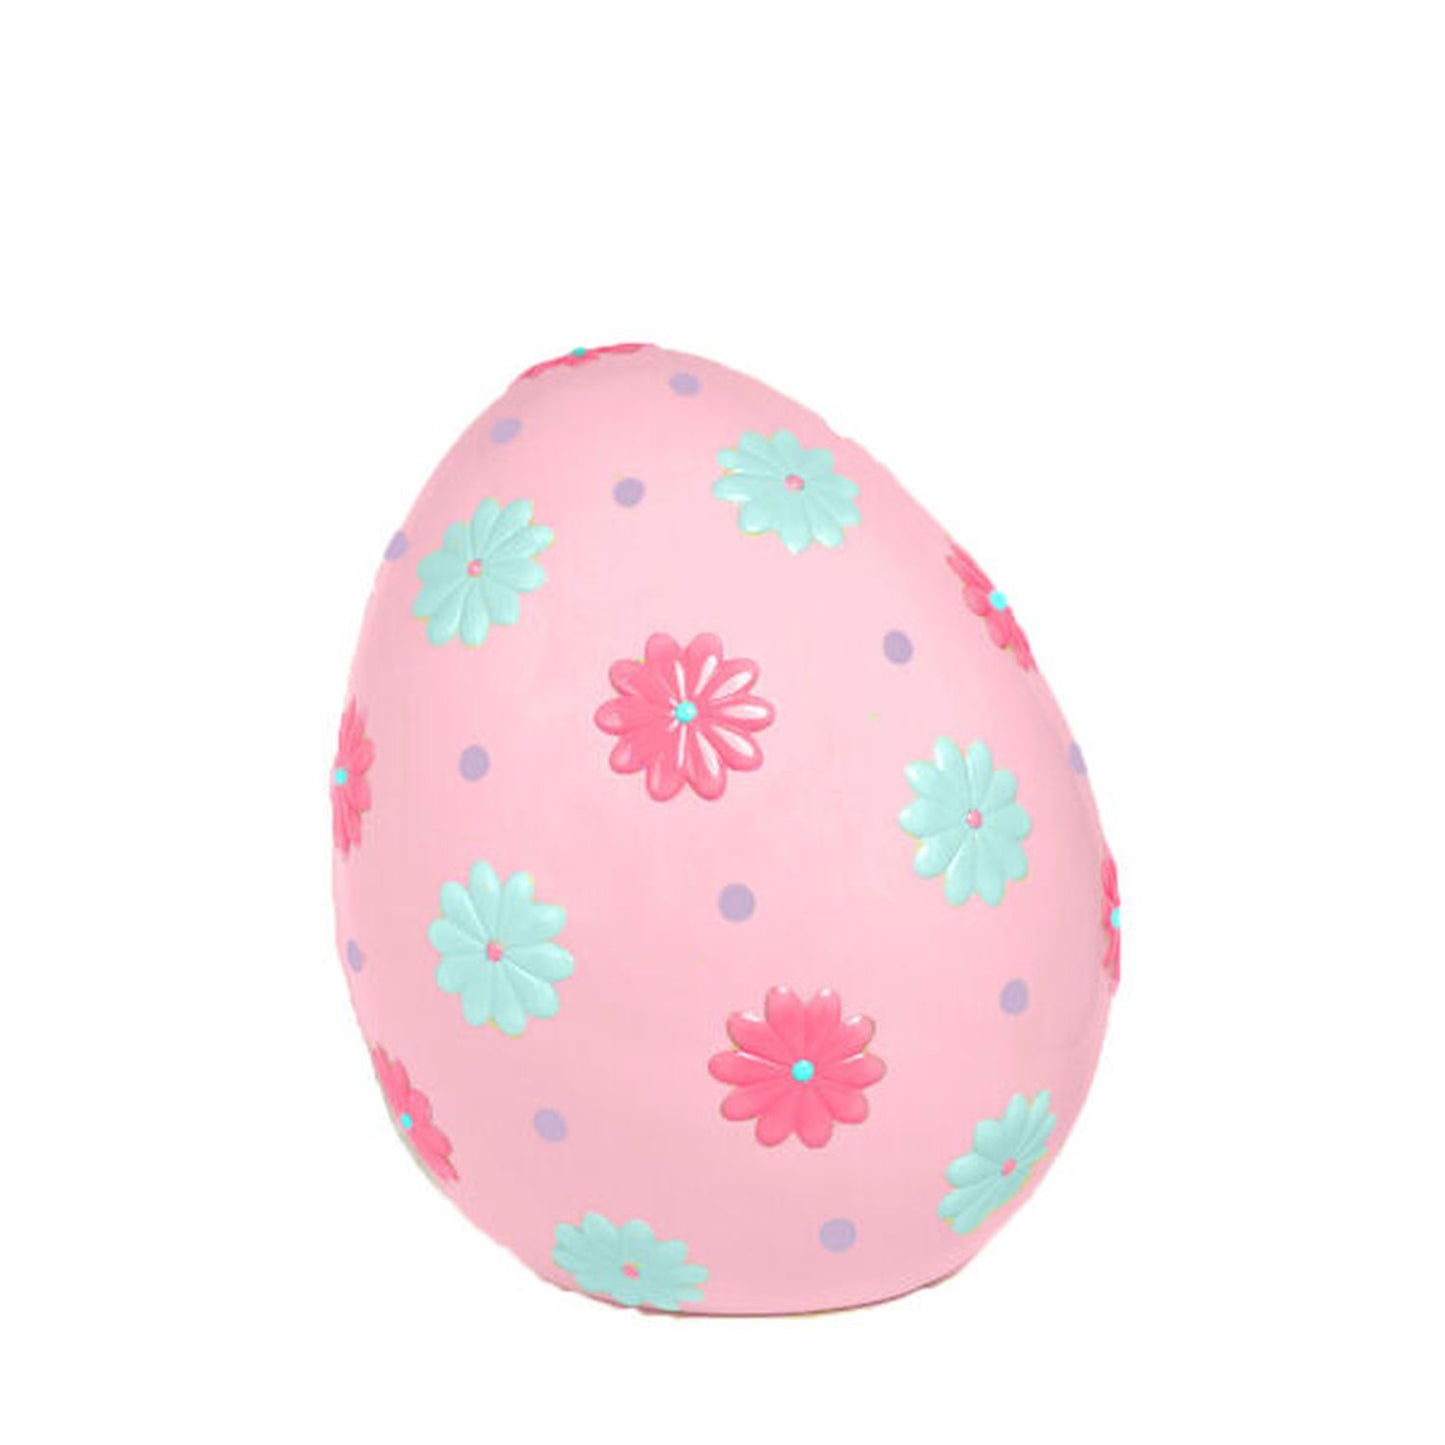 December Diamonds Cotton Candy Land 23" Medium Pink Flower Easter Egg